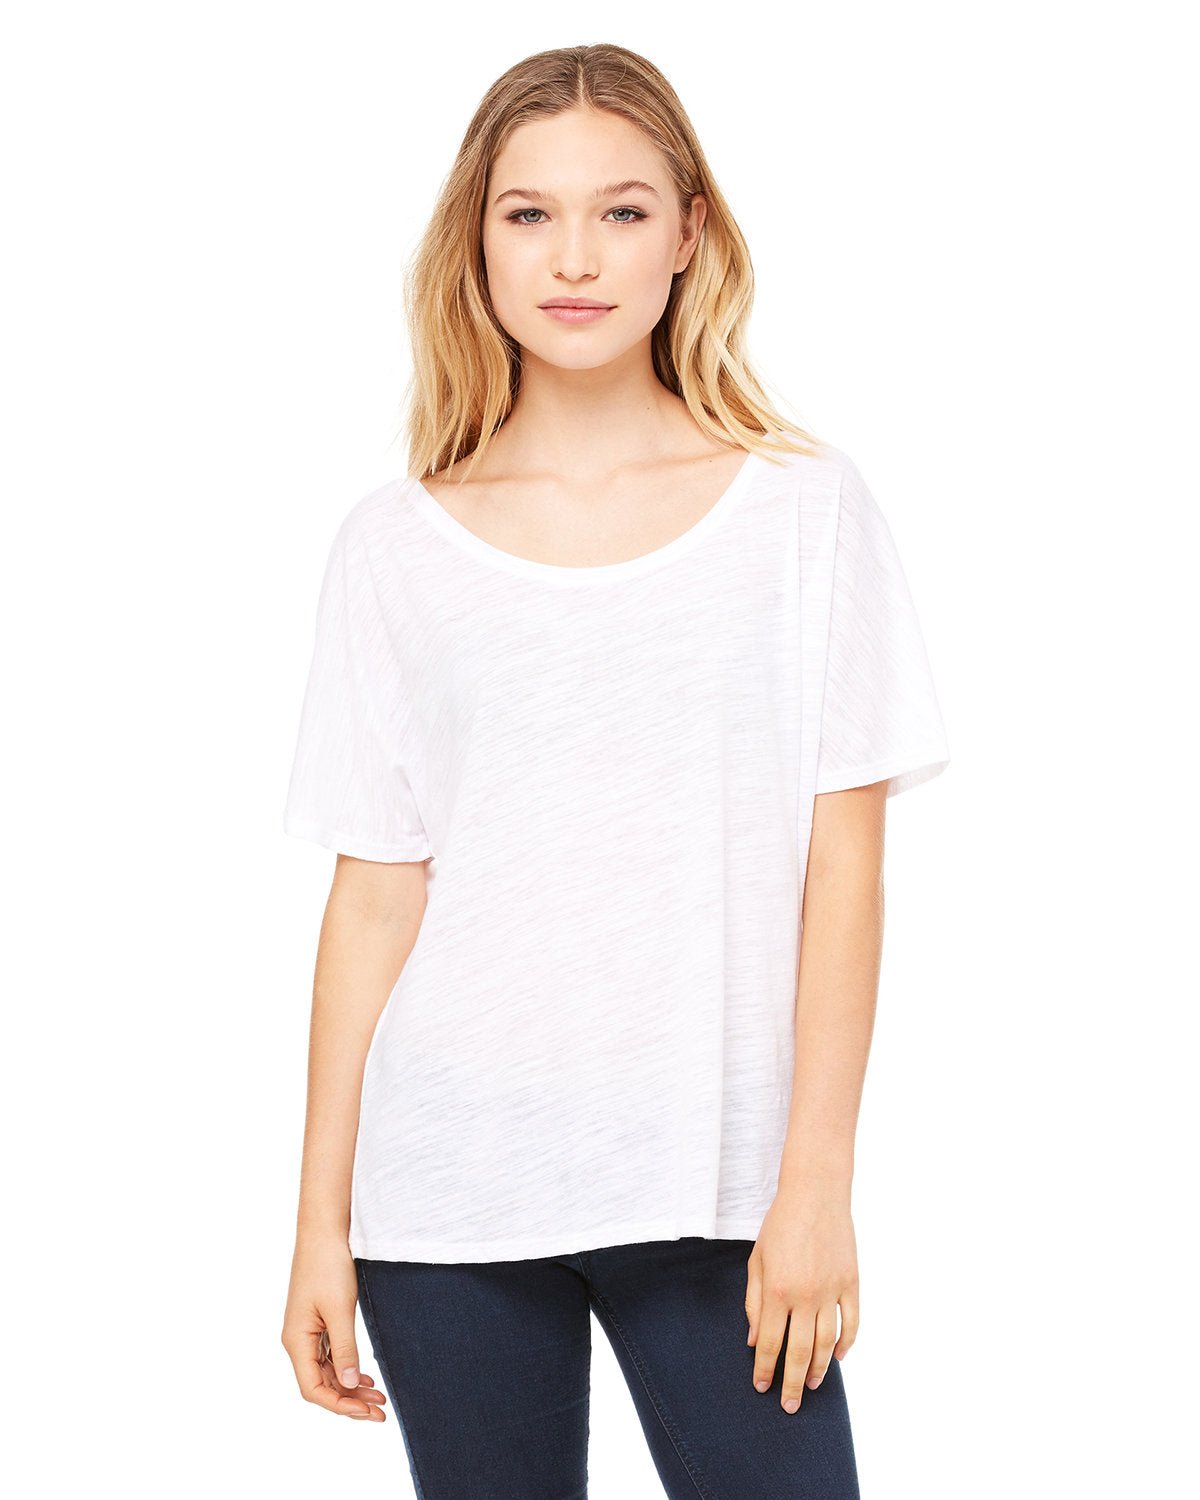 8816-Bella + Canvas-WHITE SLUB-Bella + Canvas-T-Shirts-1